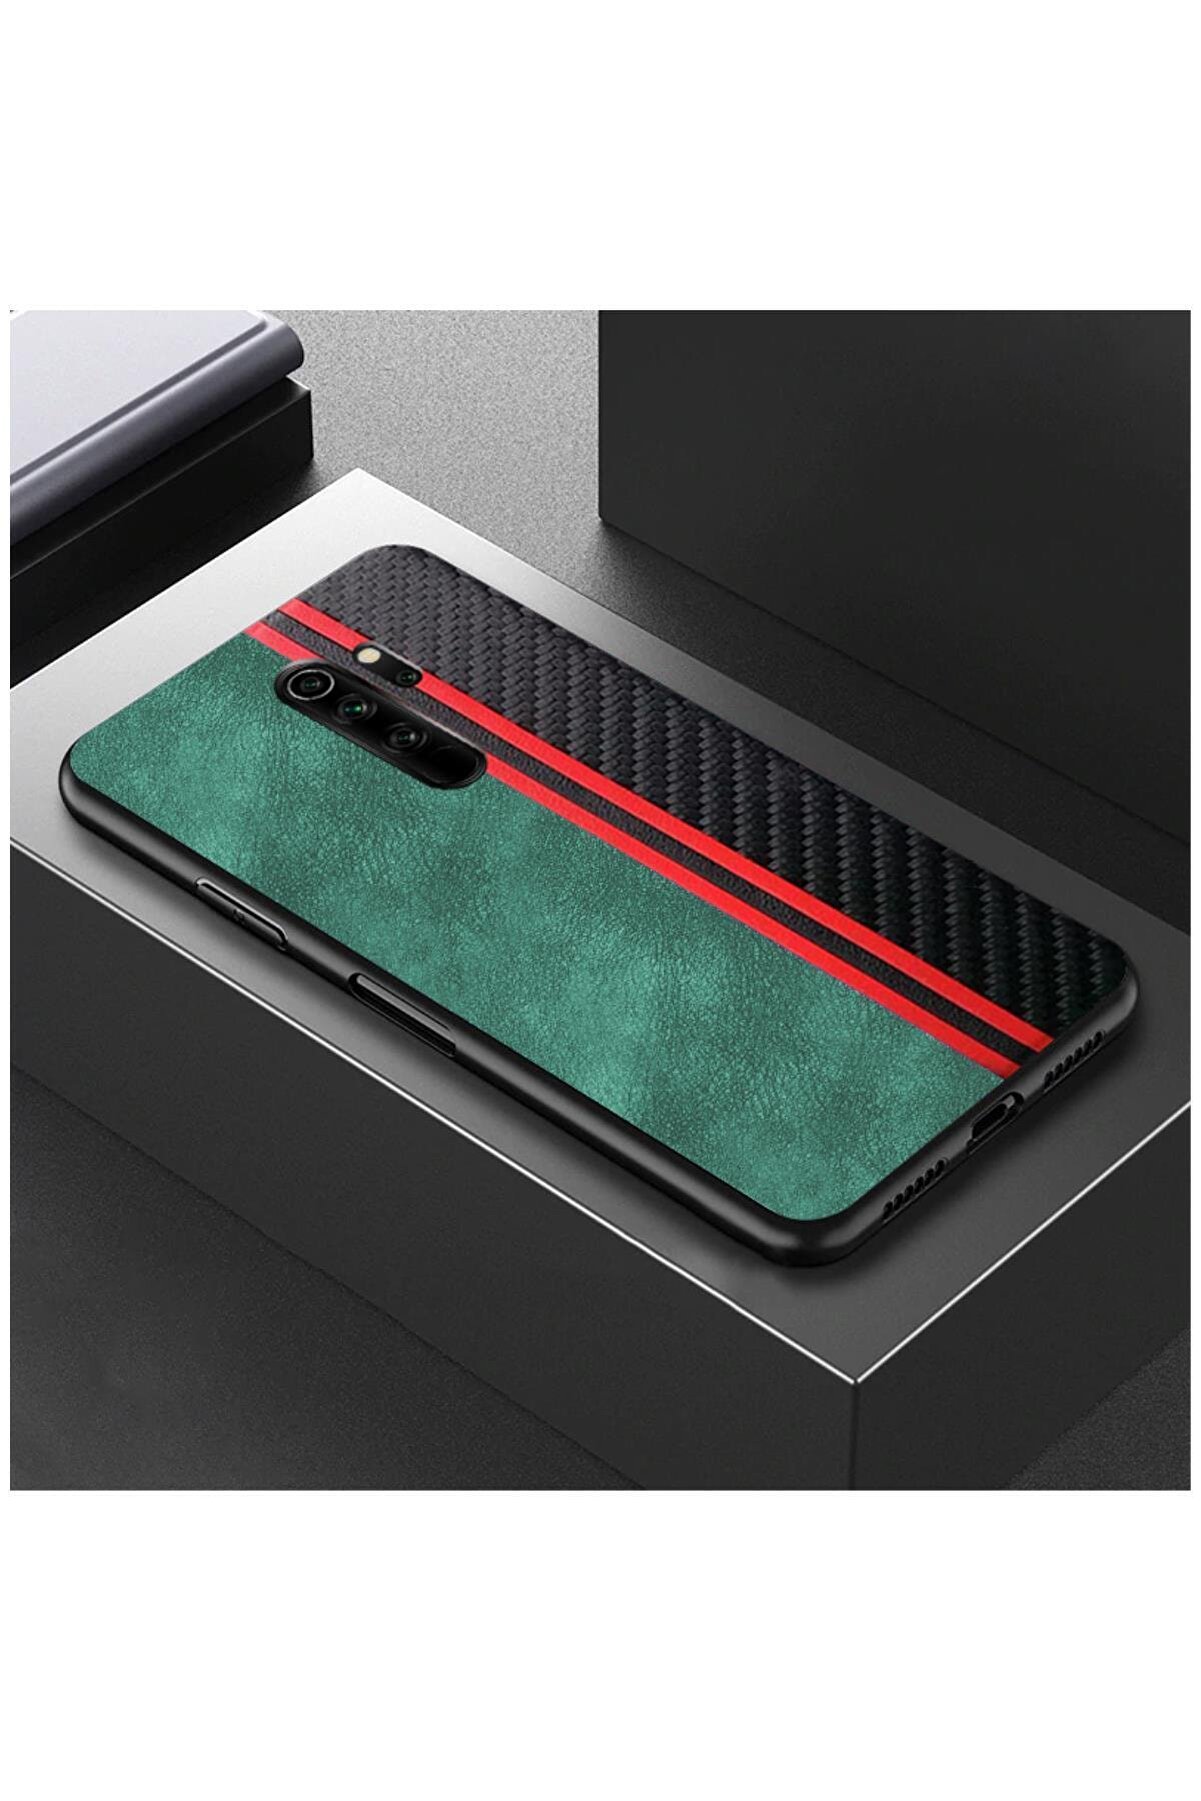 Dara Aksesuar Xiaomi Redmi Note 8 Pro Uyumlu Telefon Kılıfı Spor Deri Kılıf Yeşil